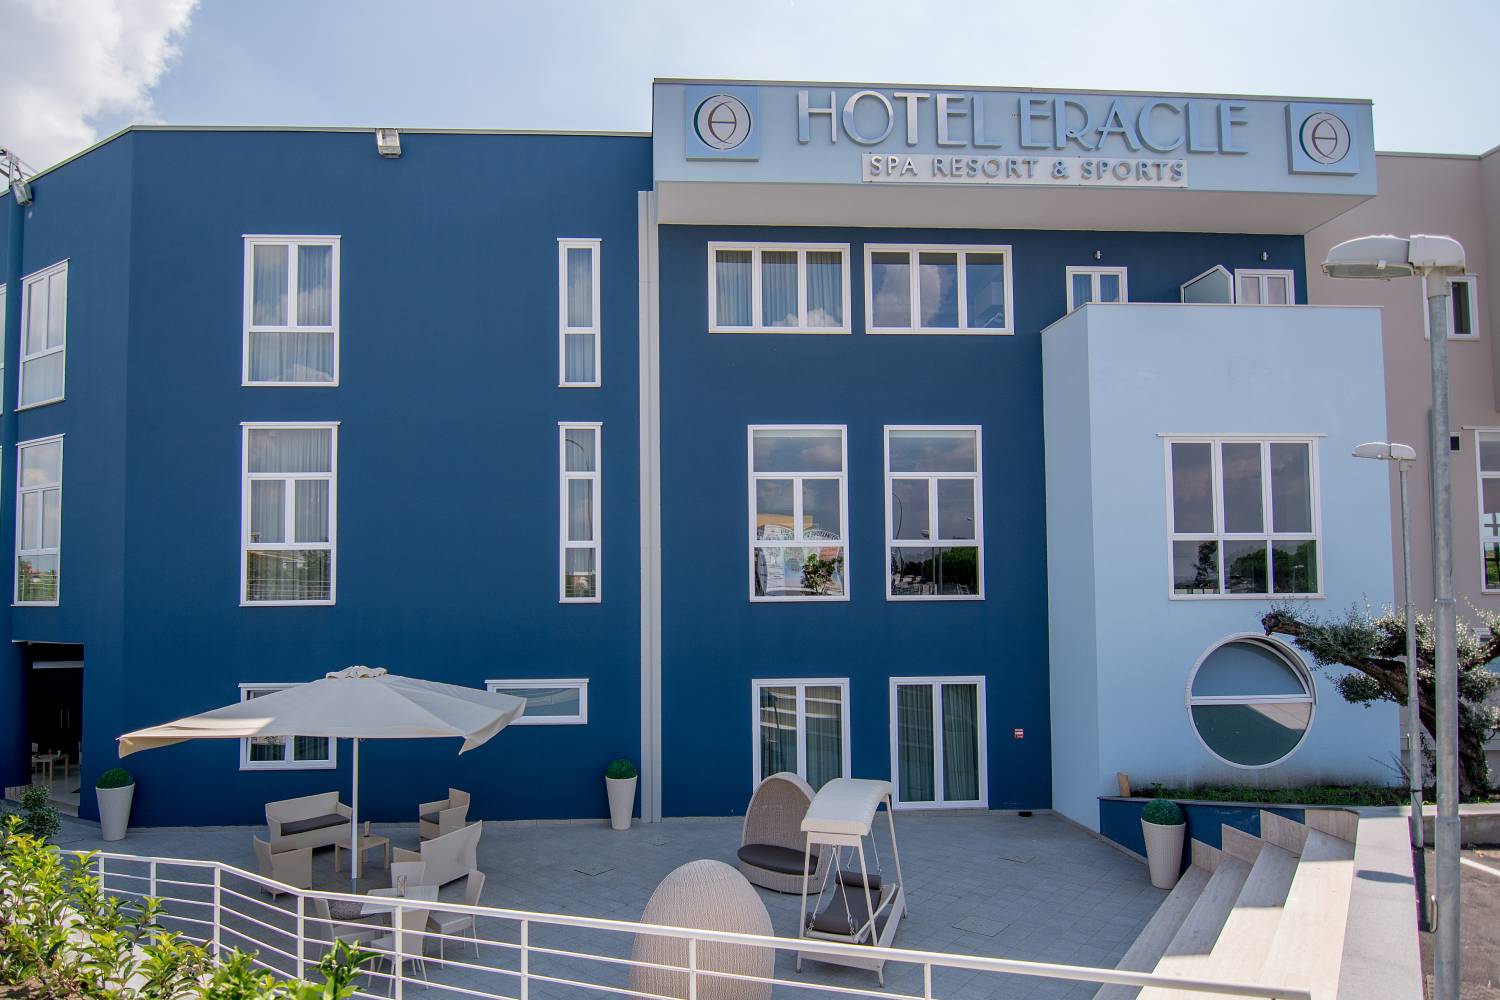 Eracle Hotel